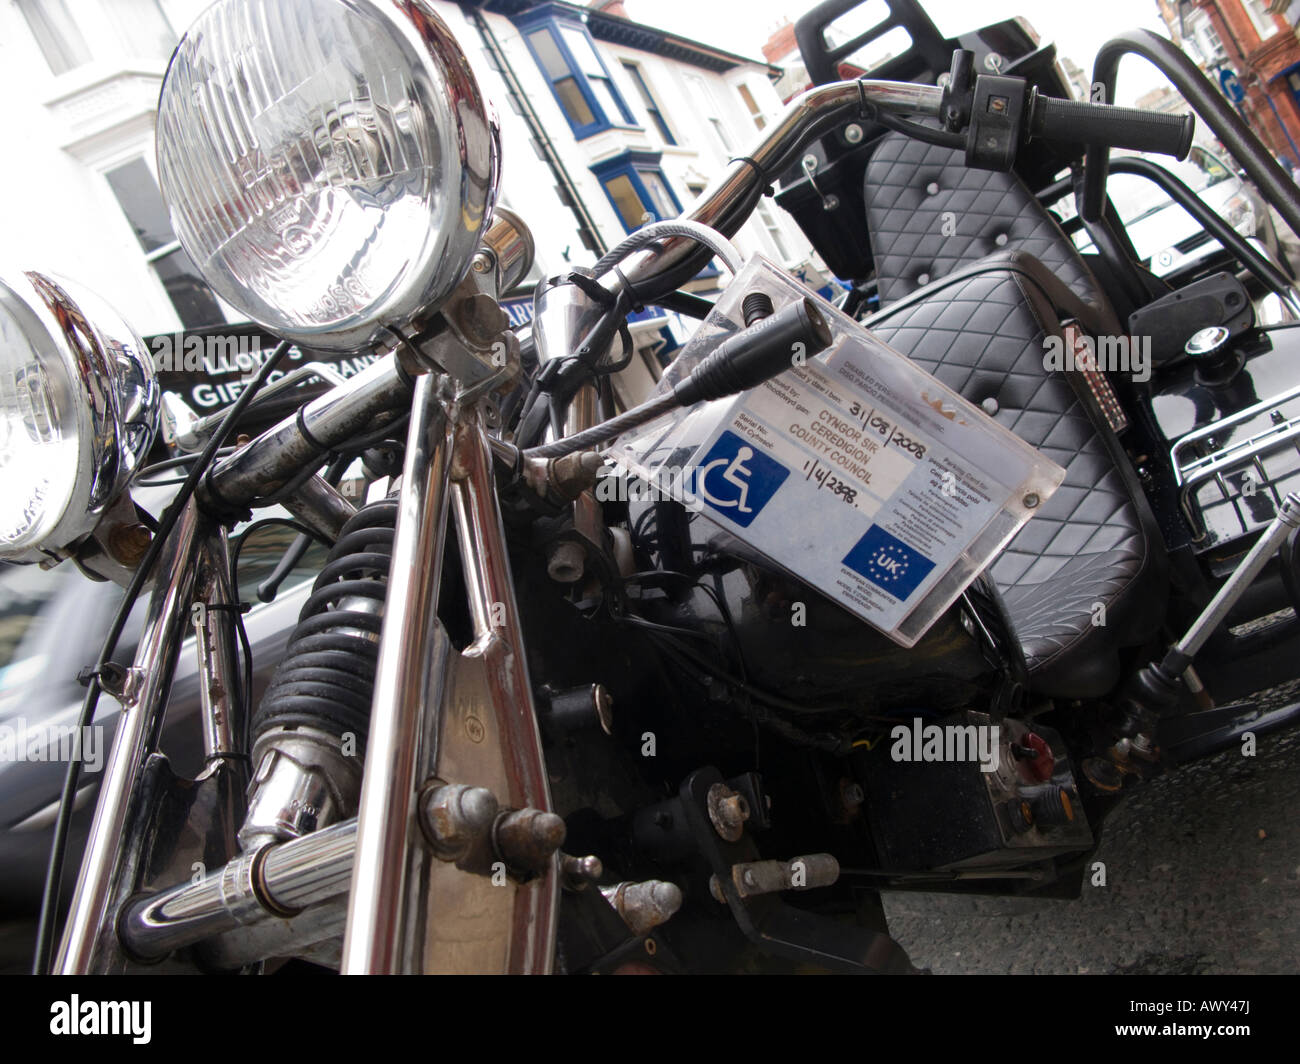 Behinderten Parkausweis auf Hot-Rod 3 Wheeler Motorrad Aberystwyth Wales UK  Stockfotografie - Alamy